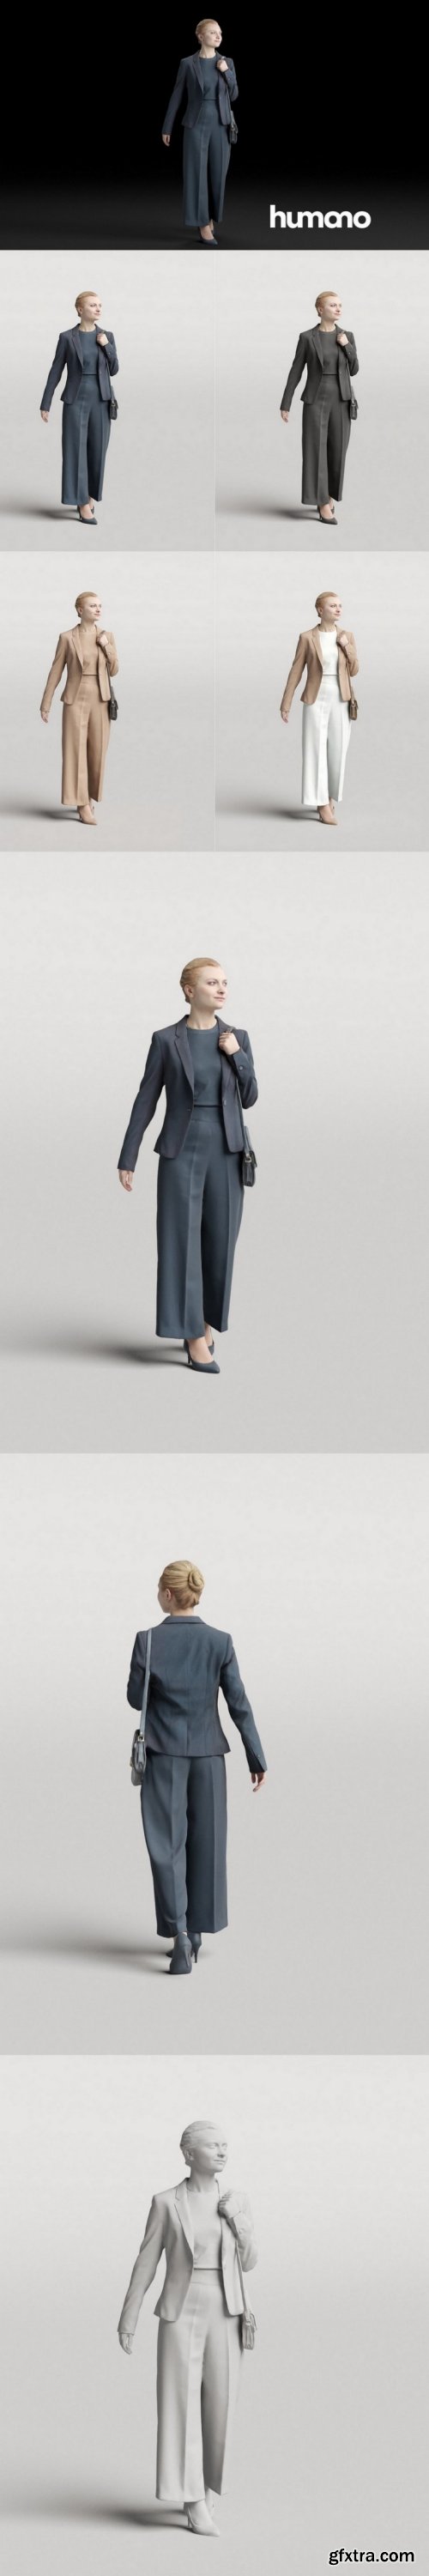 Humano Elegant woman walking with a bag 0311 3D model